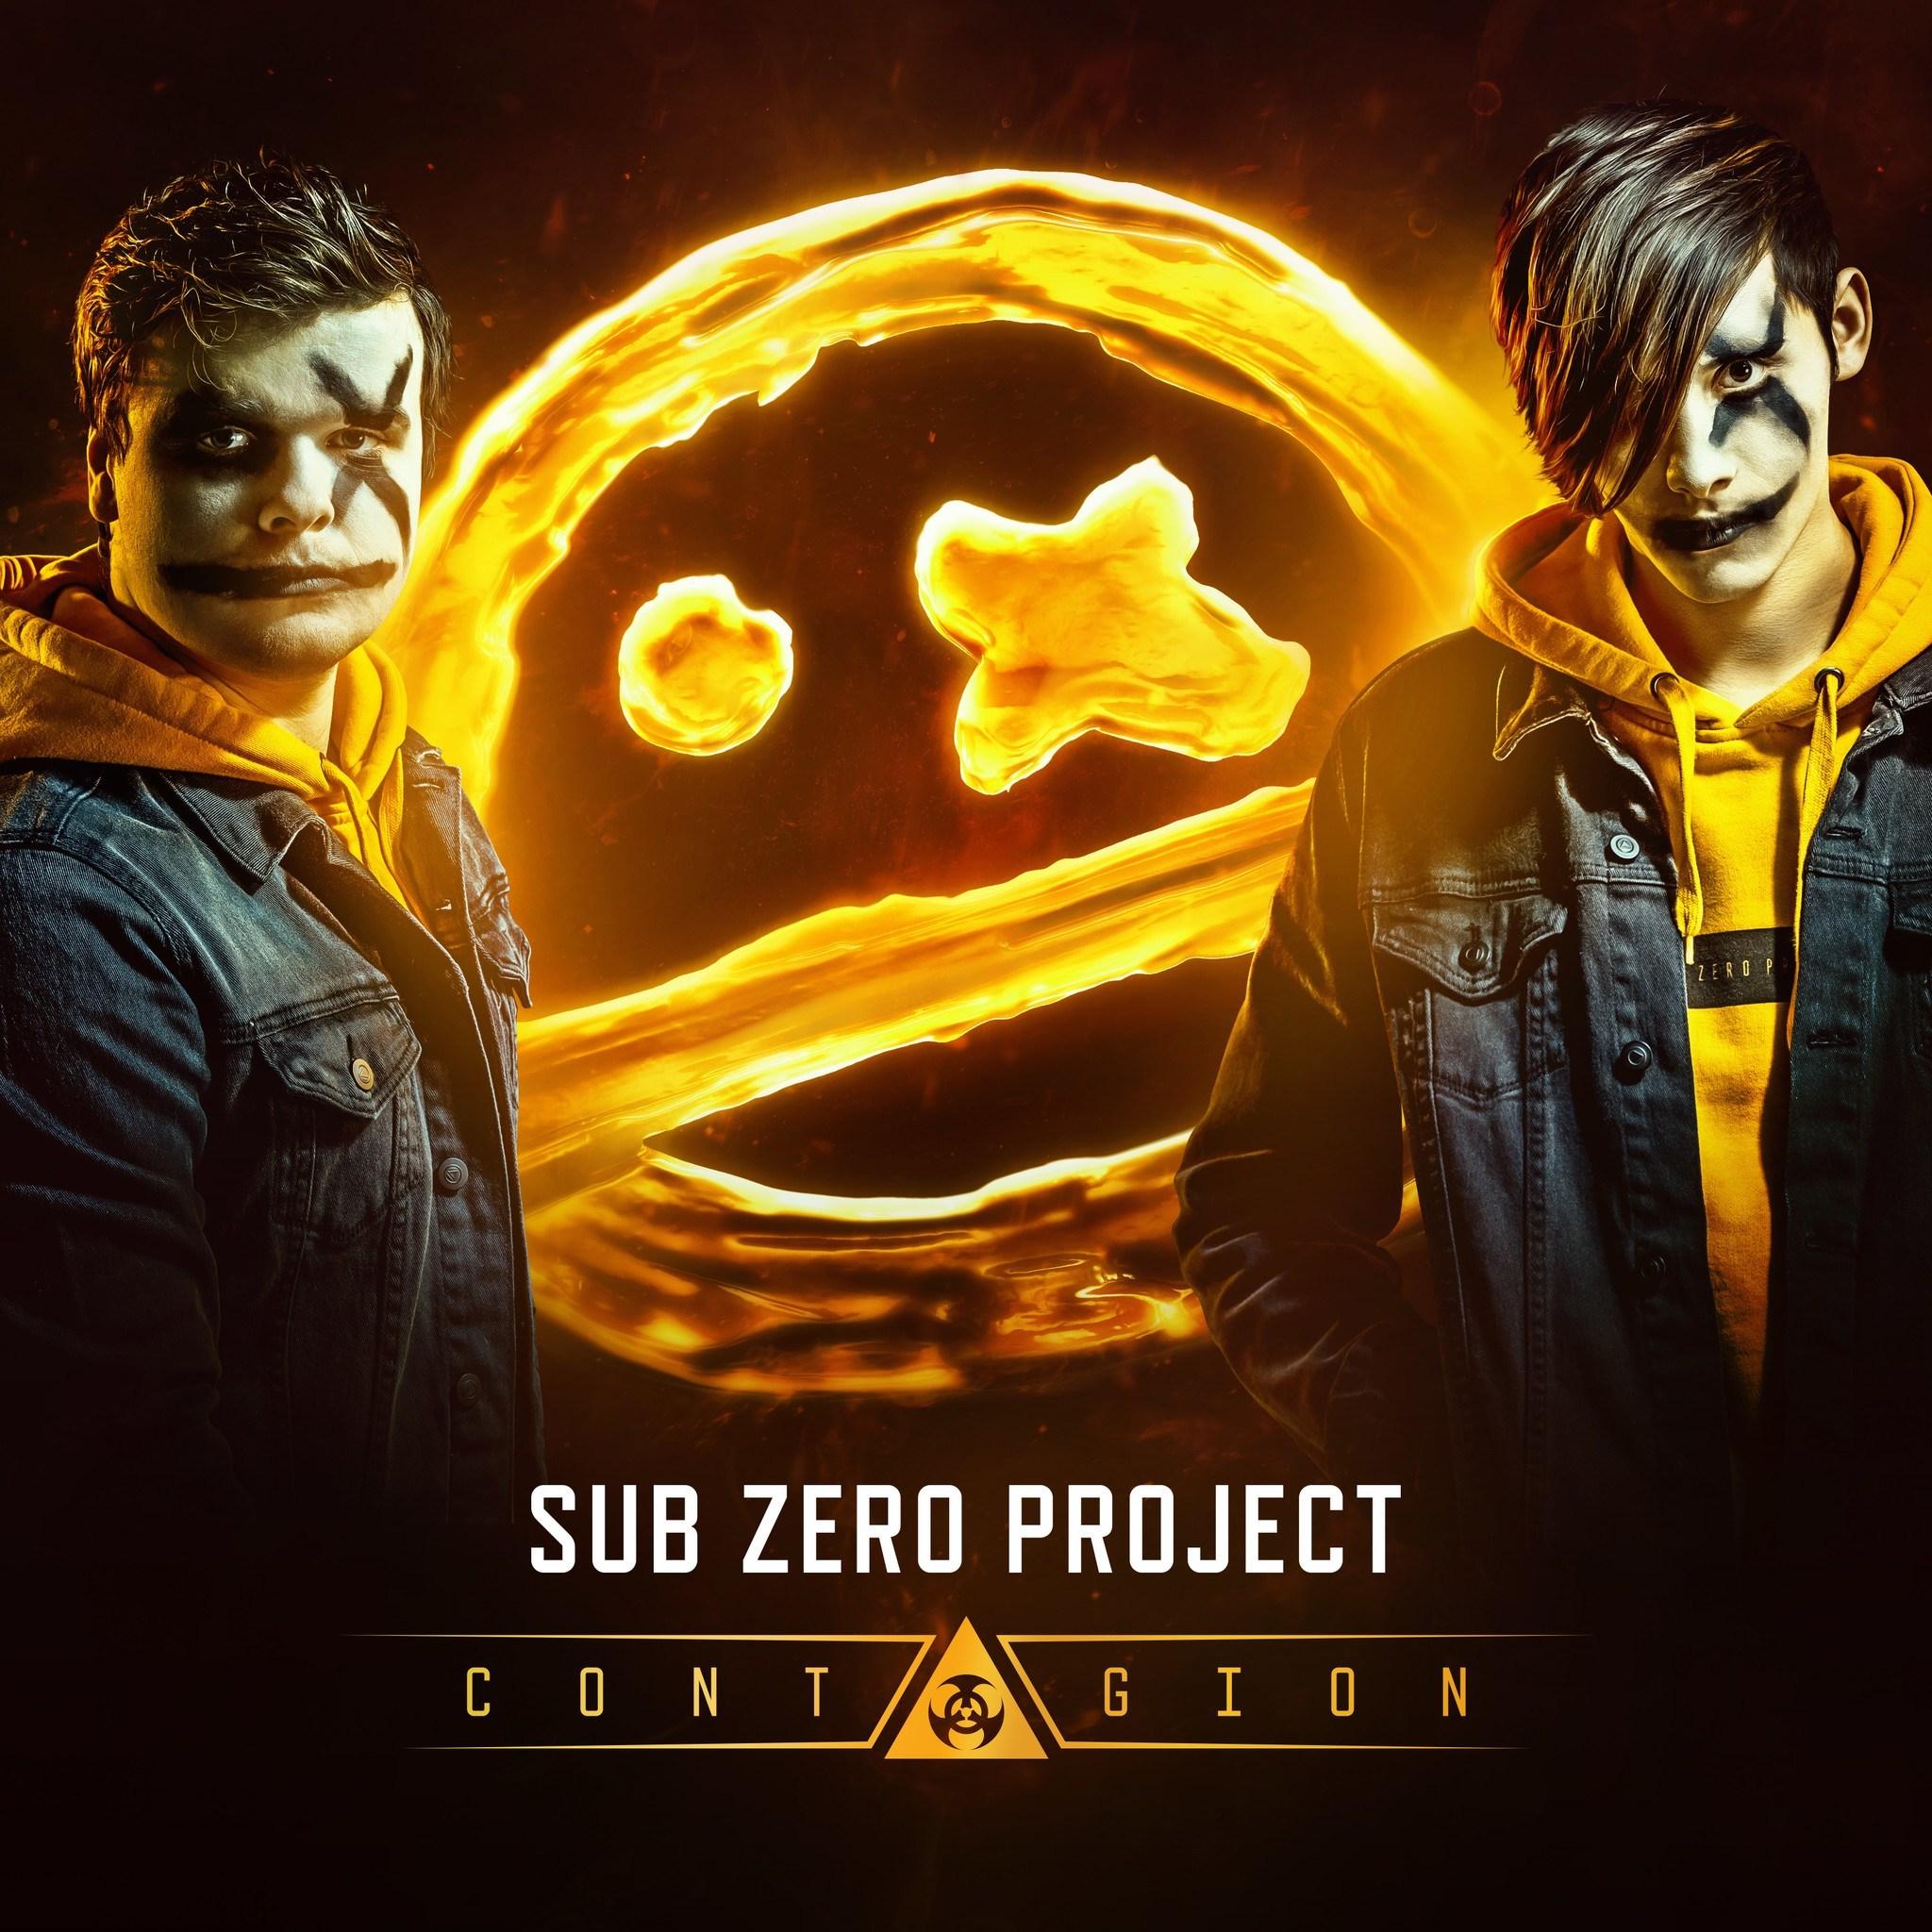 Sub Zero Project's debut album is Contagious